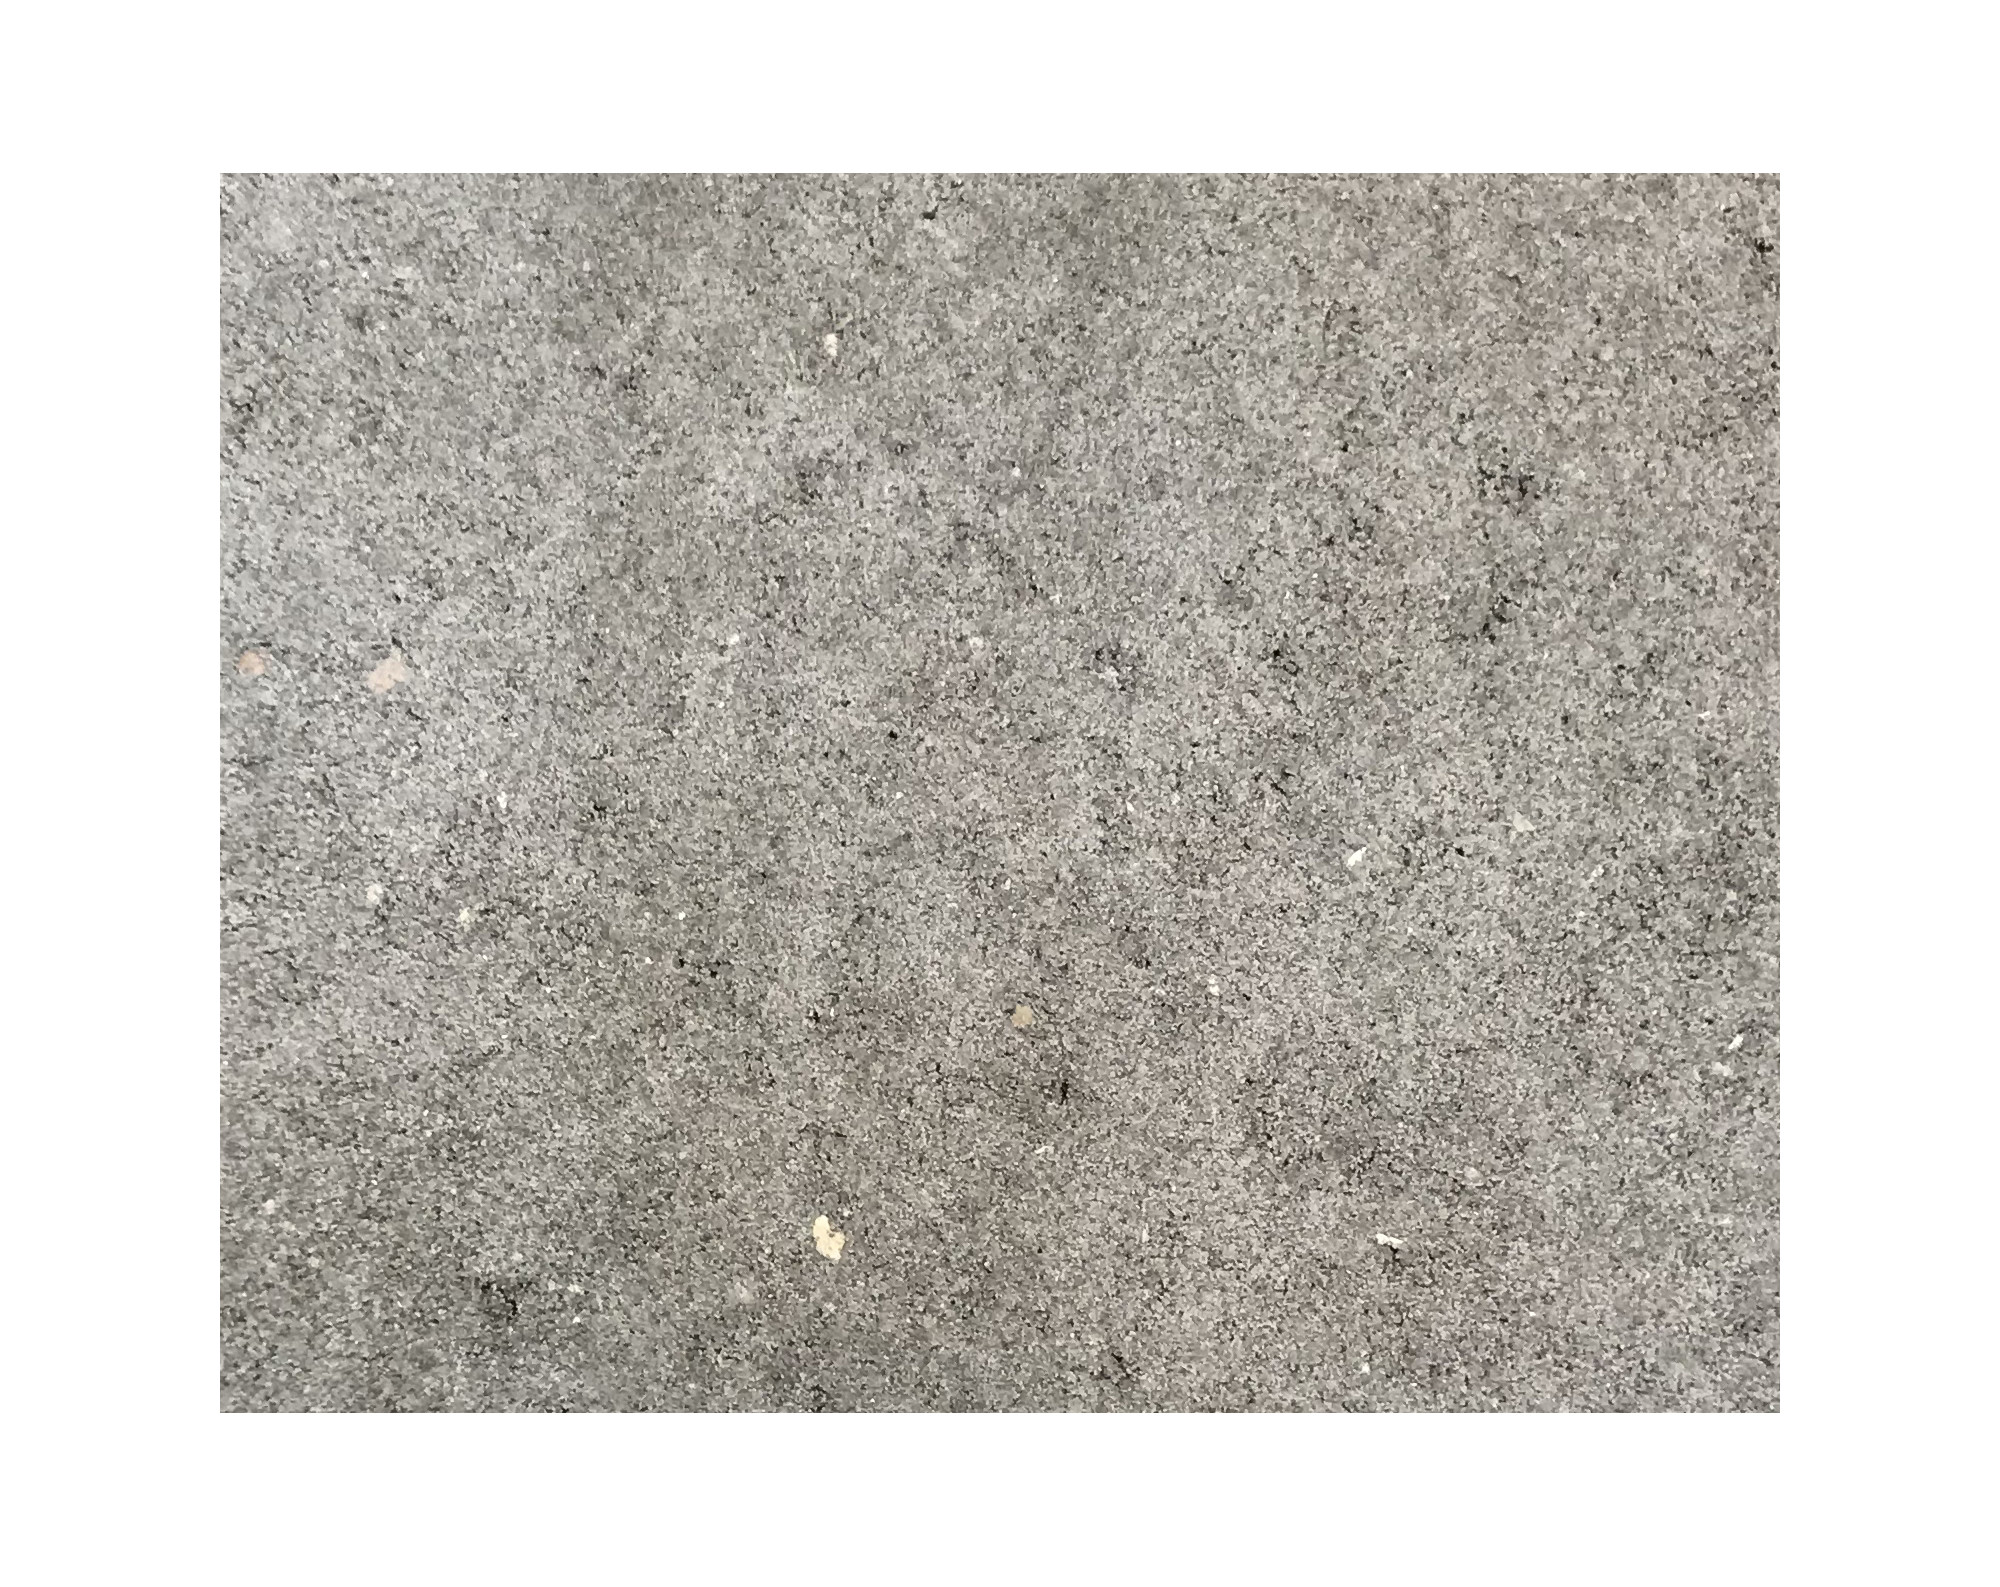 Harmo roc nevadaset, rustica-serie, 8-vormig d:4,20mx6,60m, grijs, beton